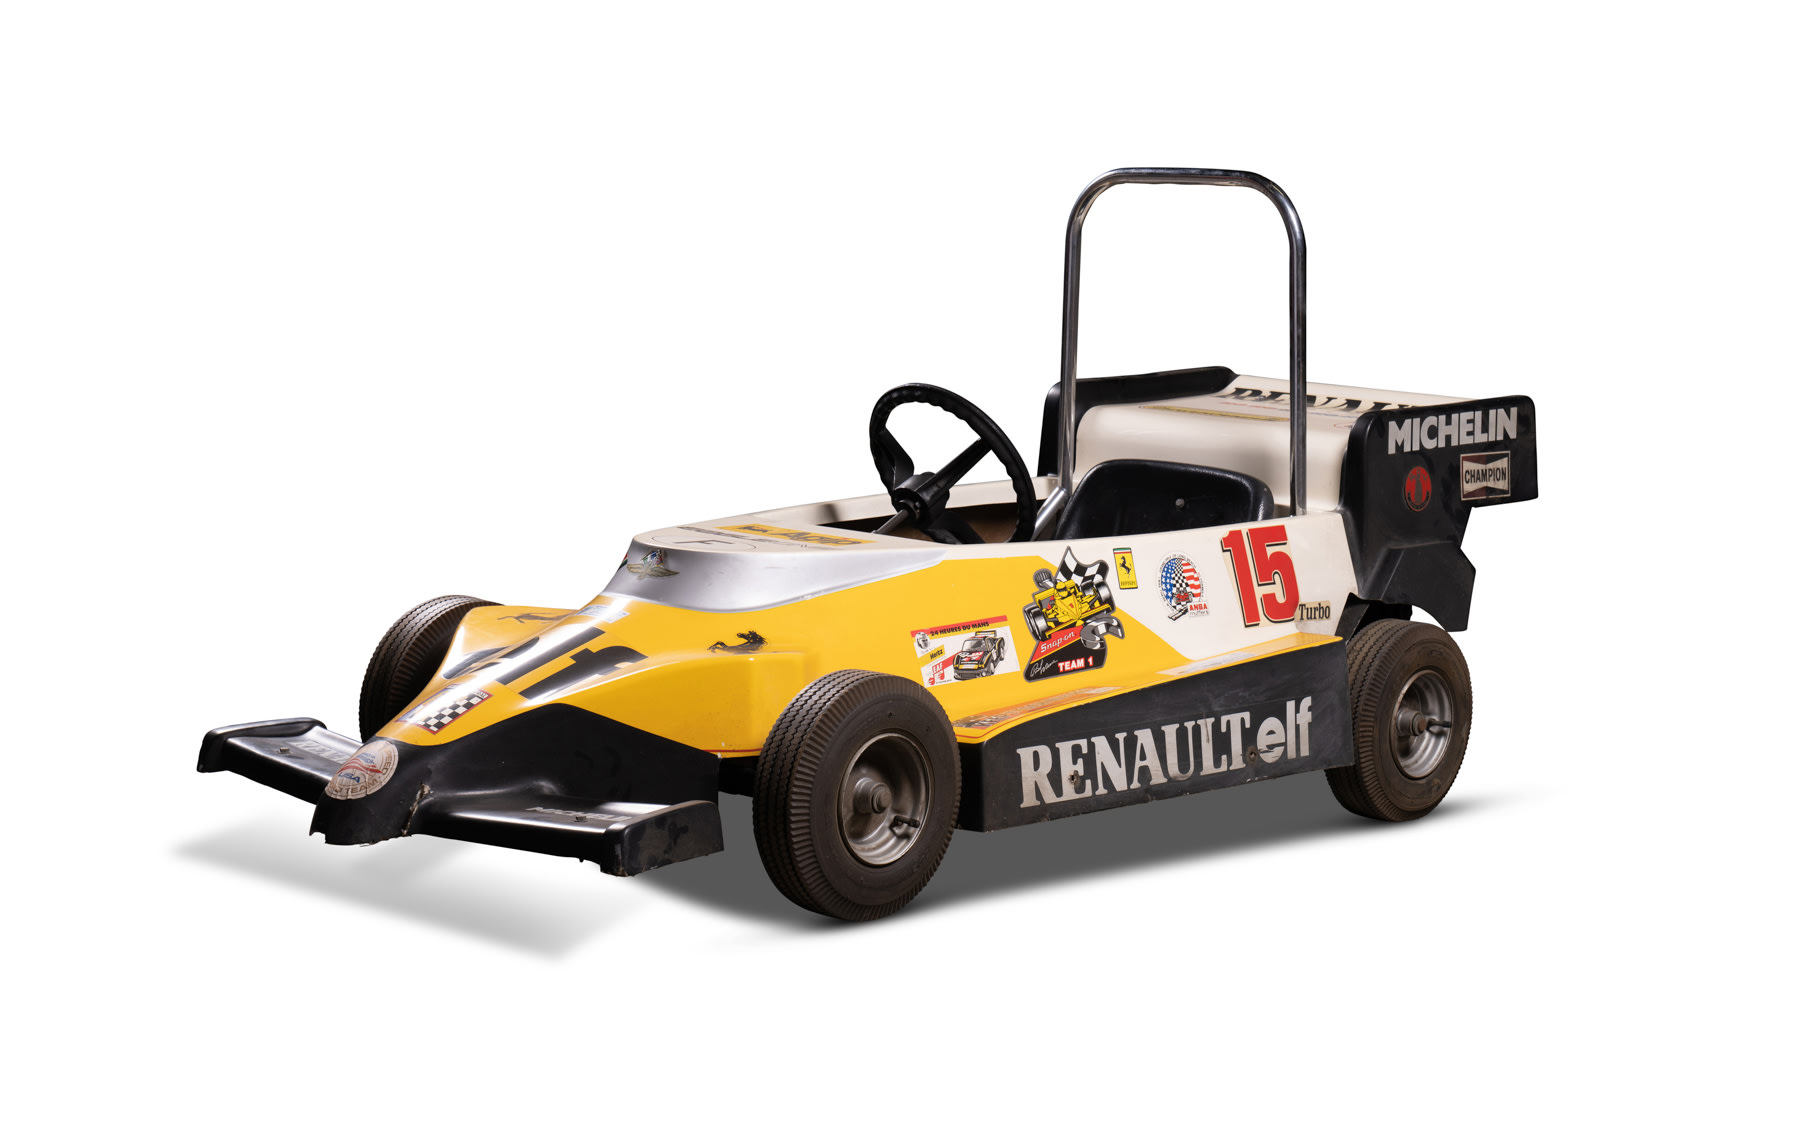 Renault Elf Grand Prix Go-Kart, c. 1988